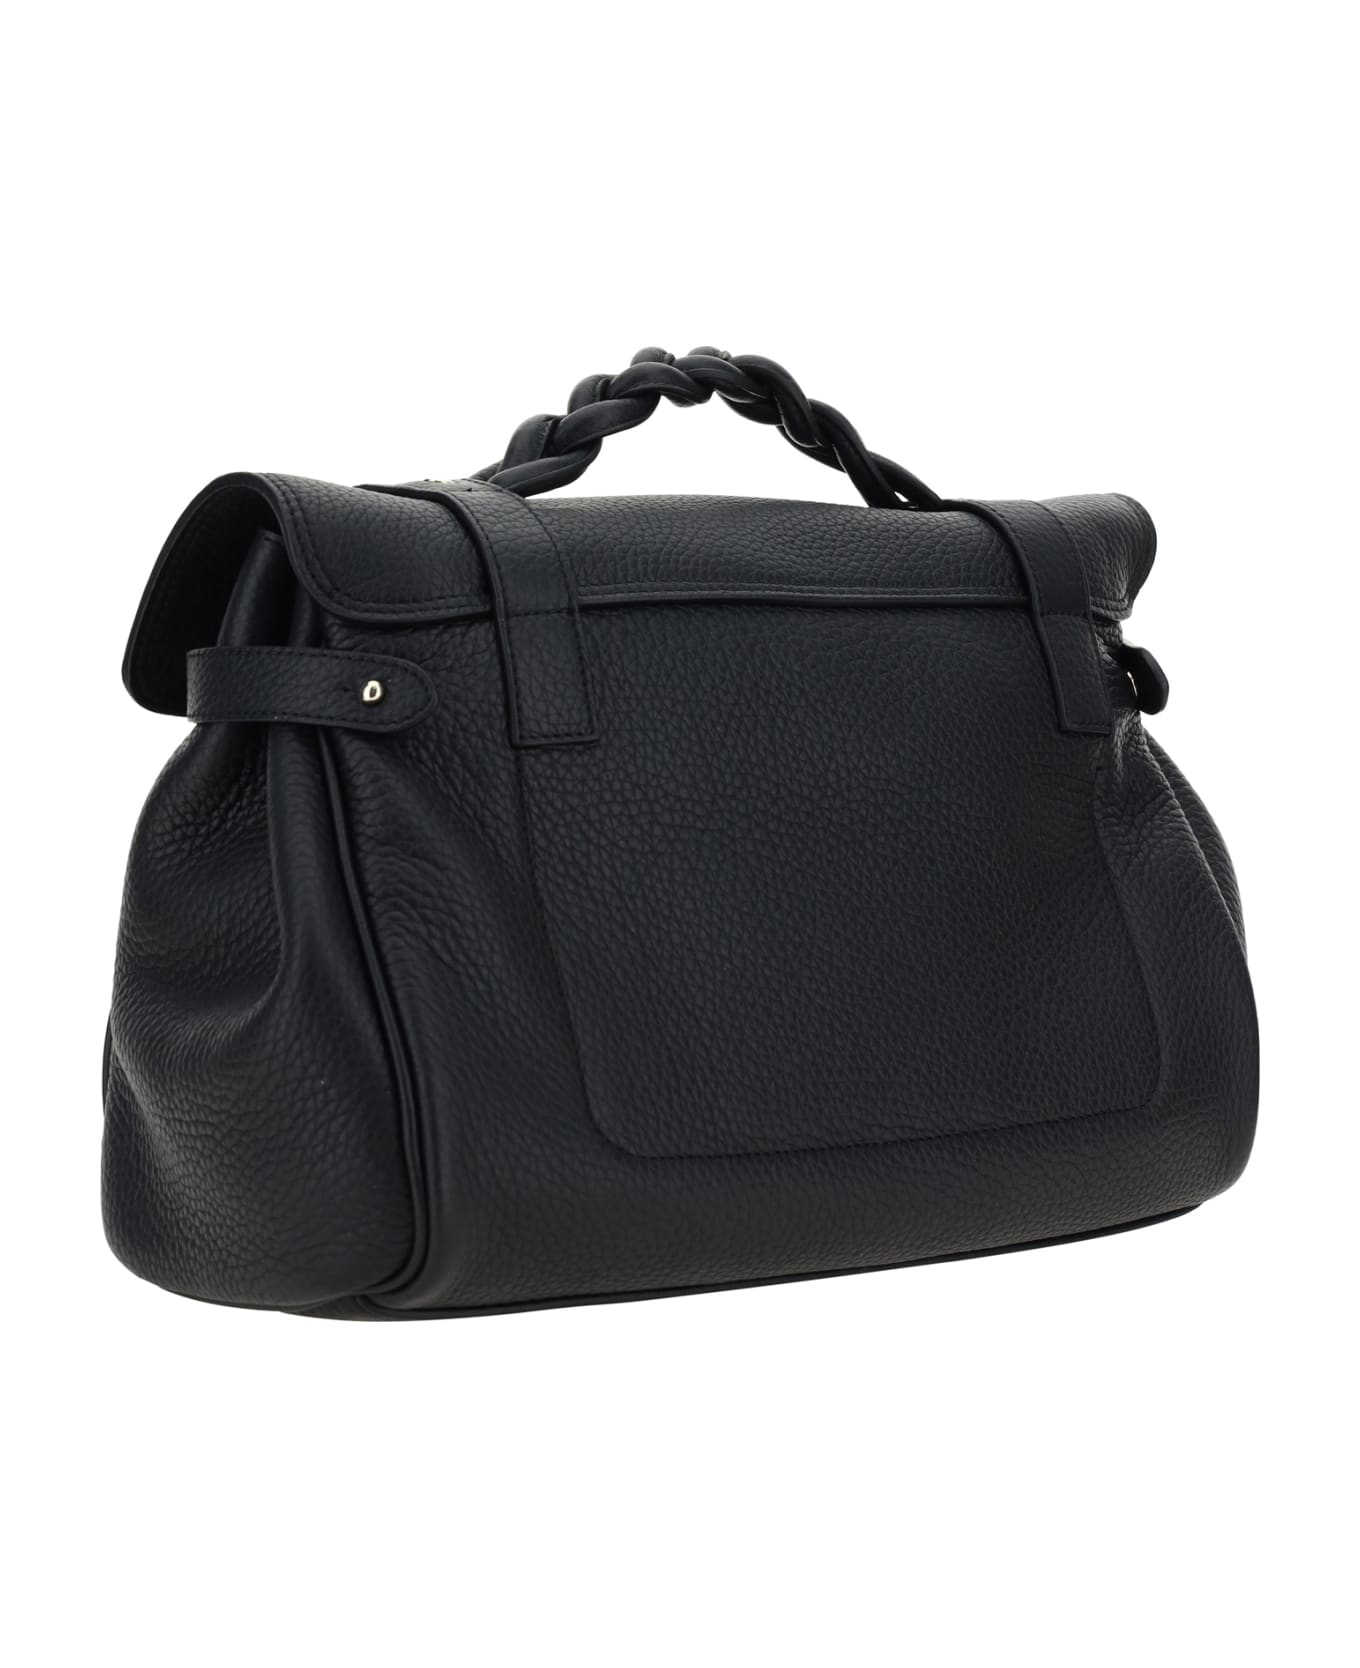 Mulberry Alexa Handbag - Black